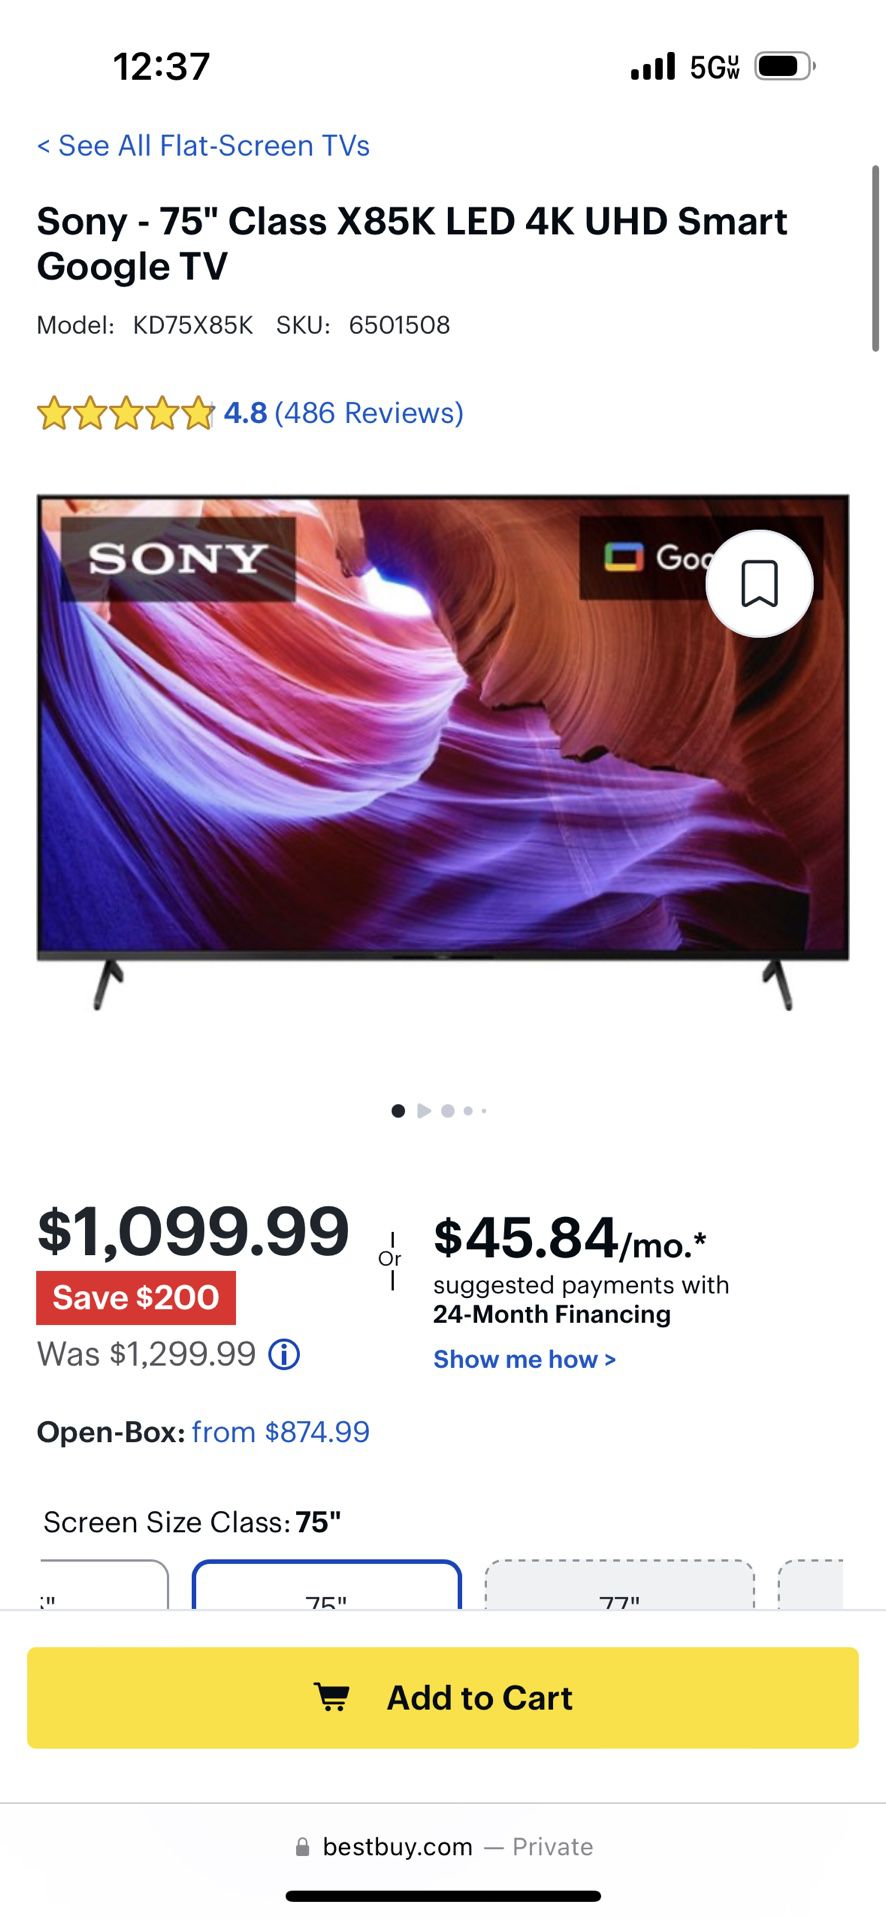 Sony 75” Class X85K LED 4K UHD SMART Google TV